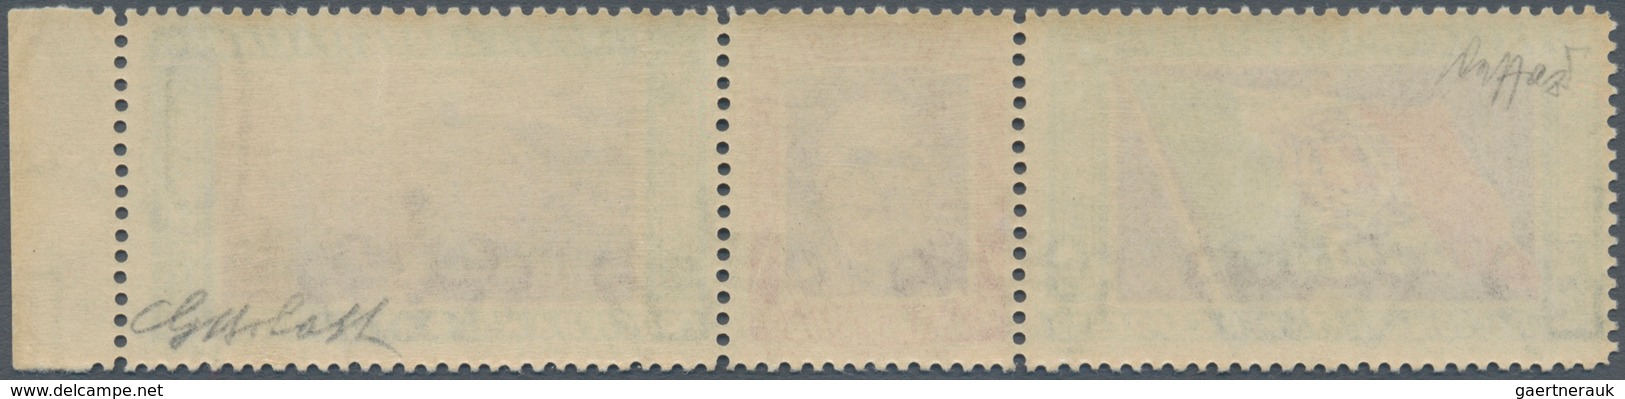 00997 Italien - Dienstmarken: 1933, 5.25l.+44.75l. "Servicio Di Stato", Right Marginal Se-tenant Strip, Fr - Dienstzegels